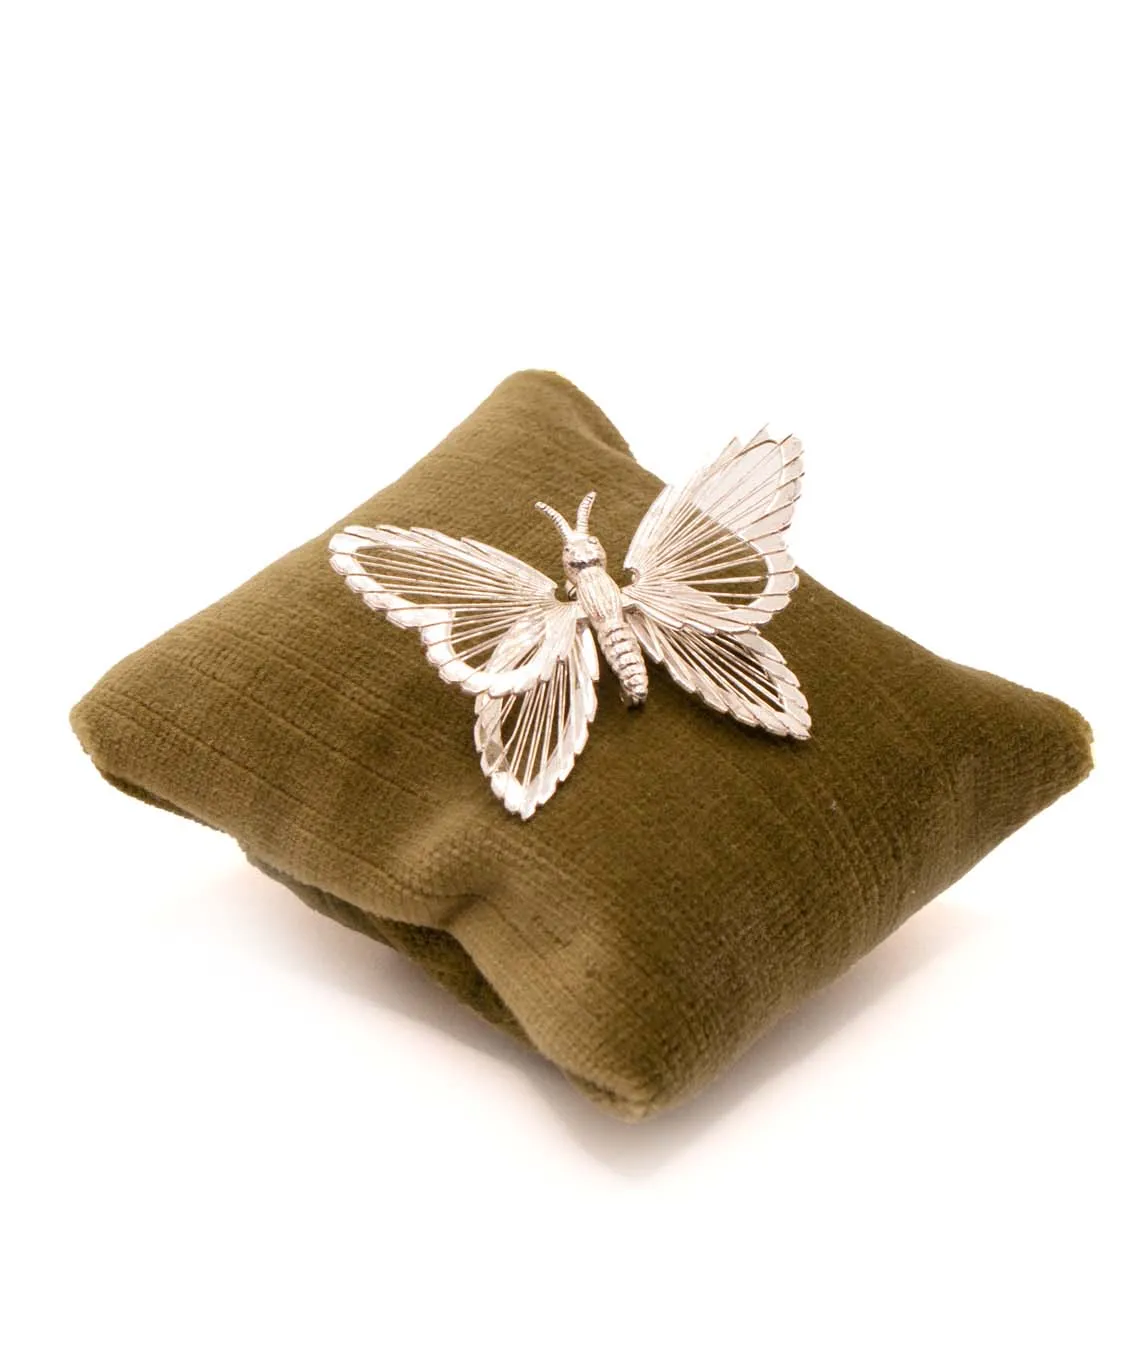 Monet silver tone wire butterfly brooch sitting on green velvet pillow